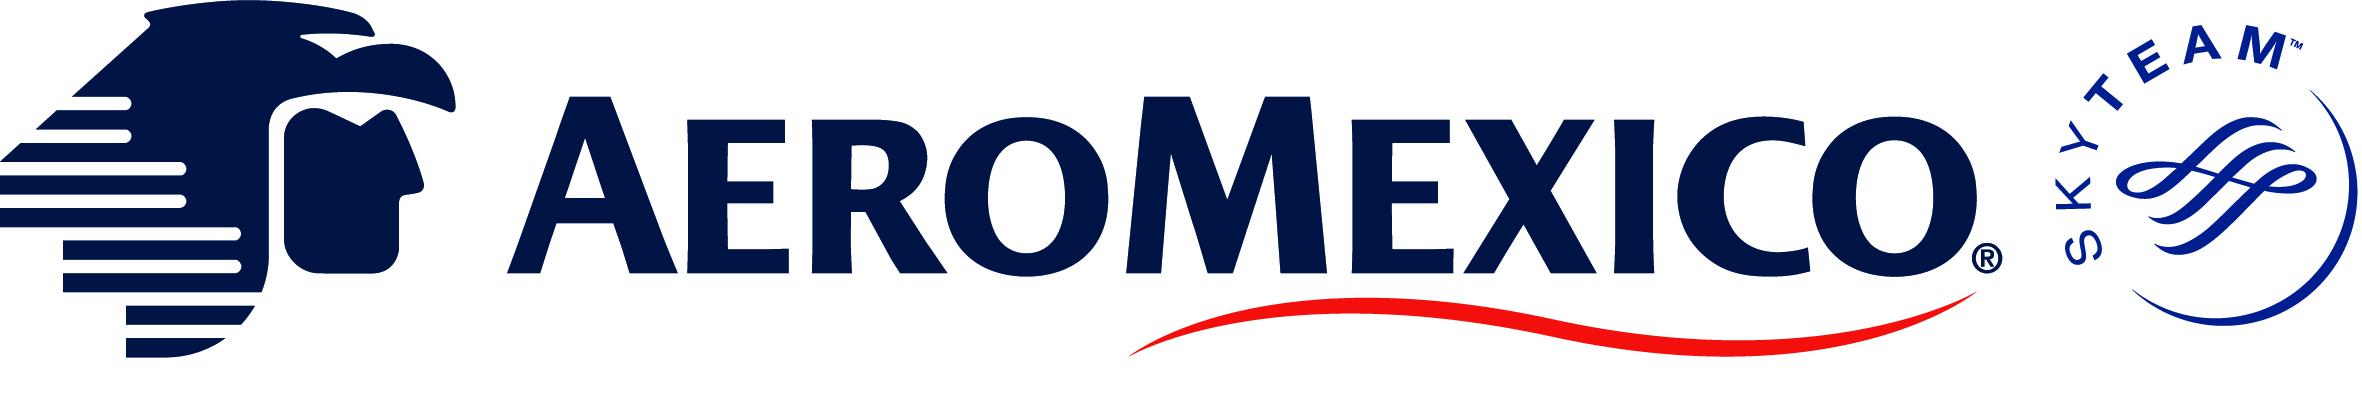 Aeromexico Logo PNG - 102045